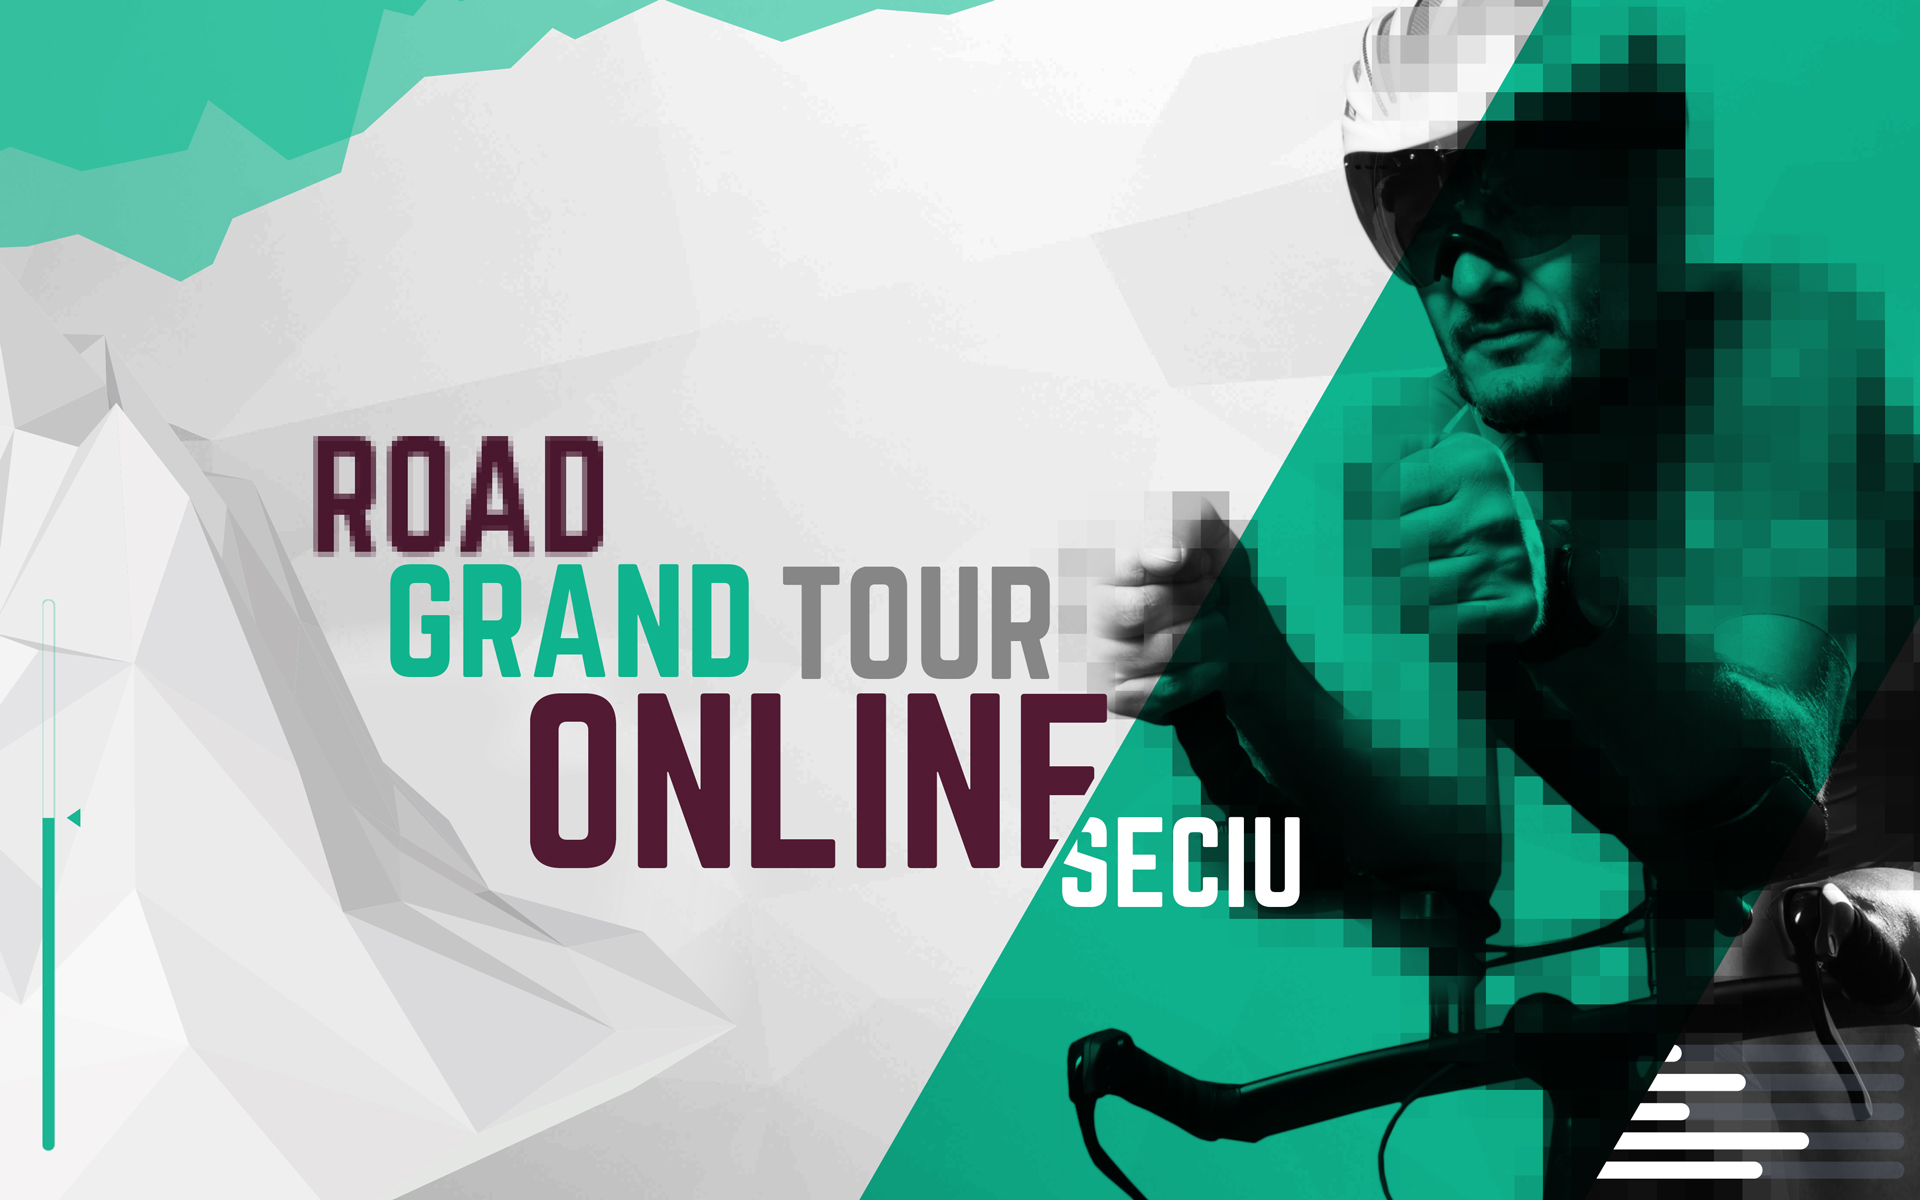 Road Grand Tour - Seciu online